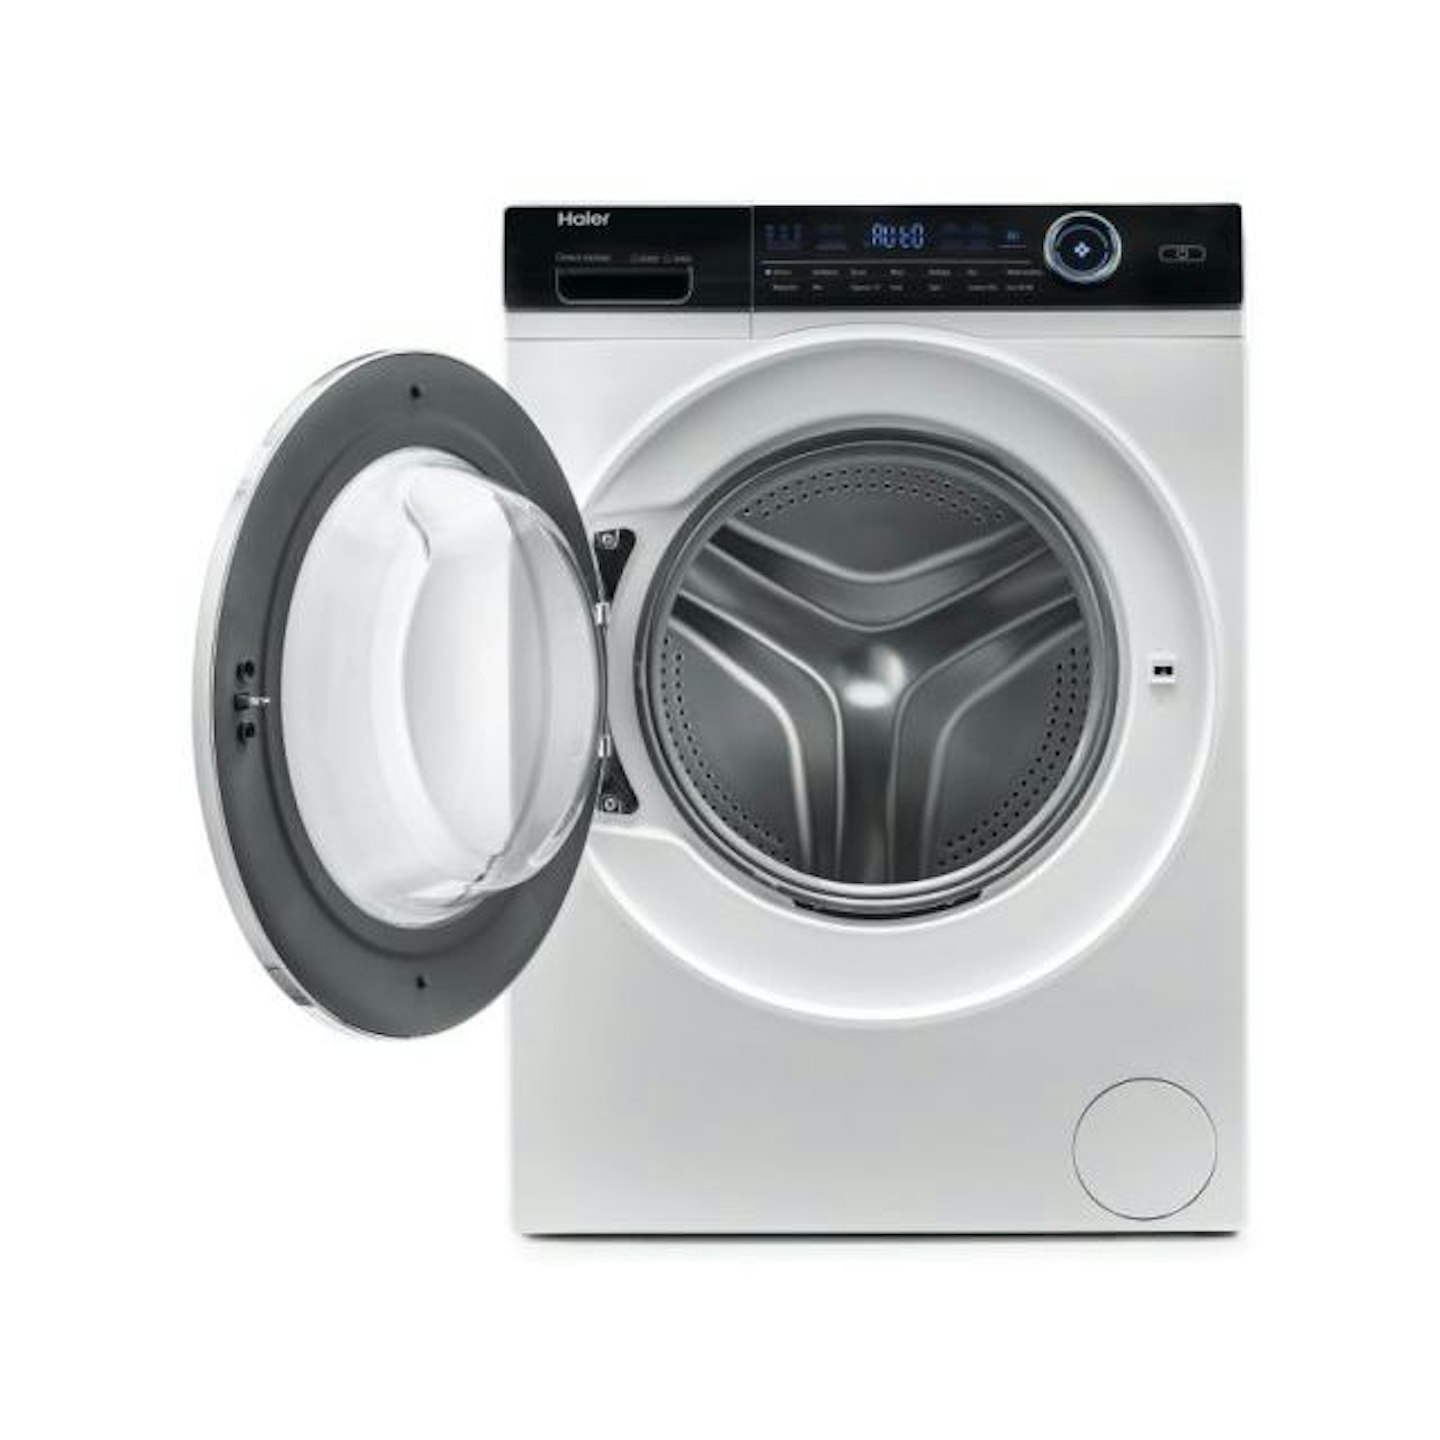 Washer dryer I-Pro Series 7